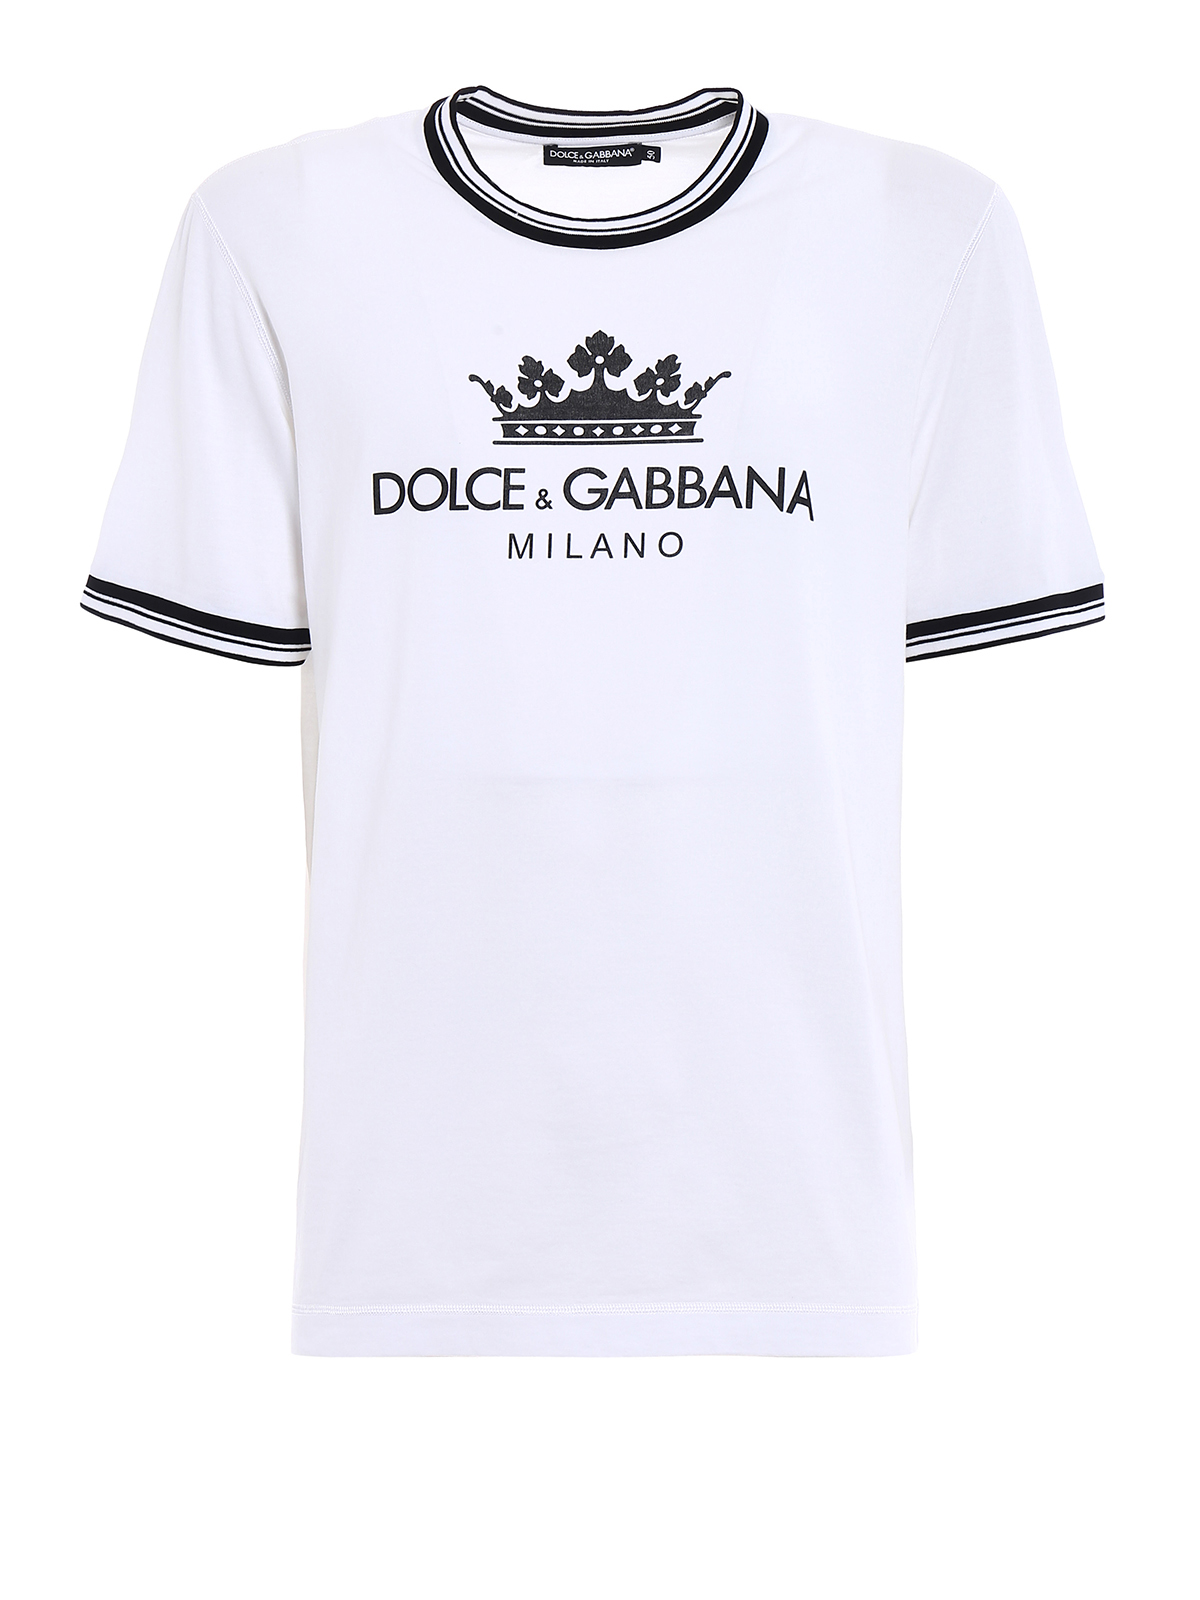 Aprender acerca 76+ imagen dolce and gabbana crown t shirt ...